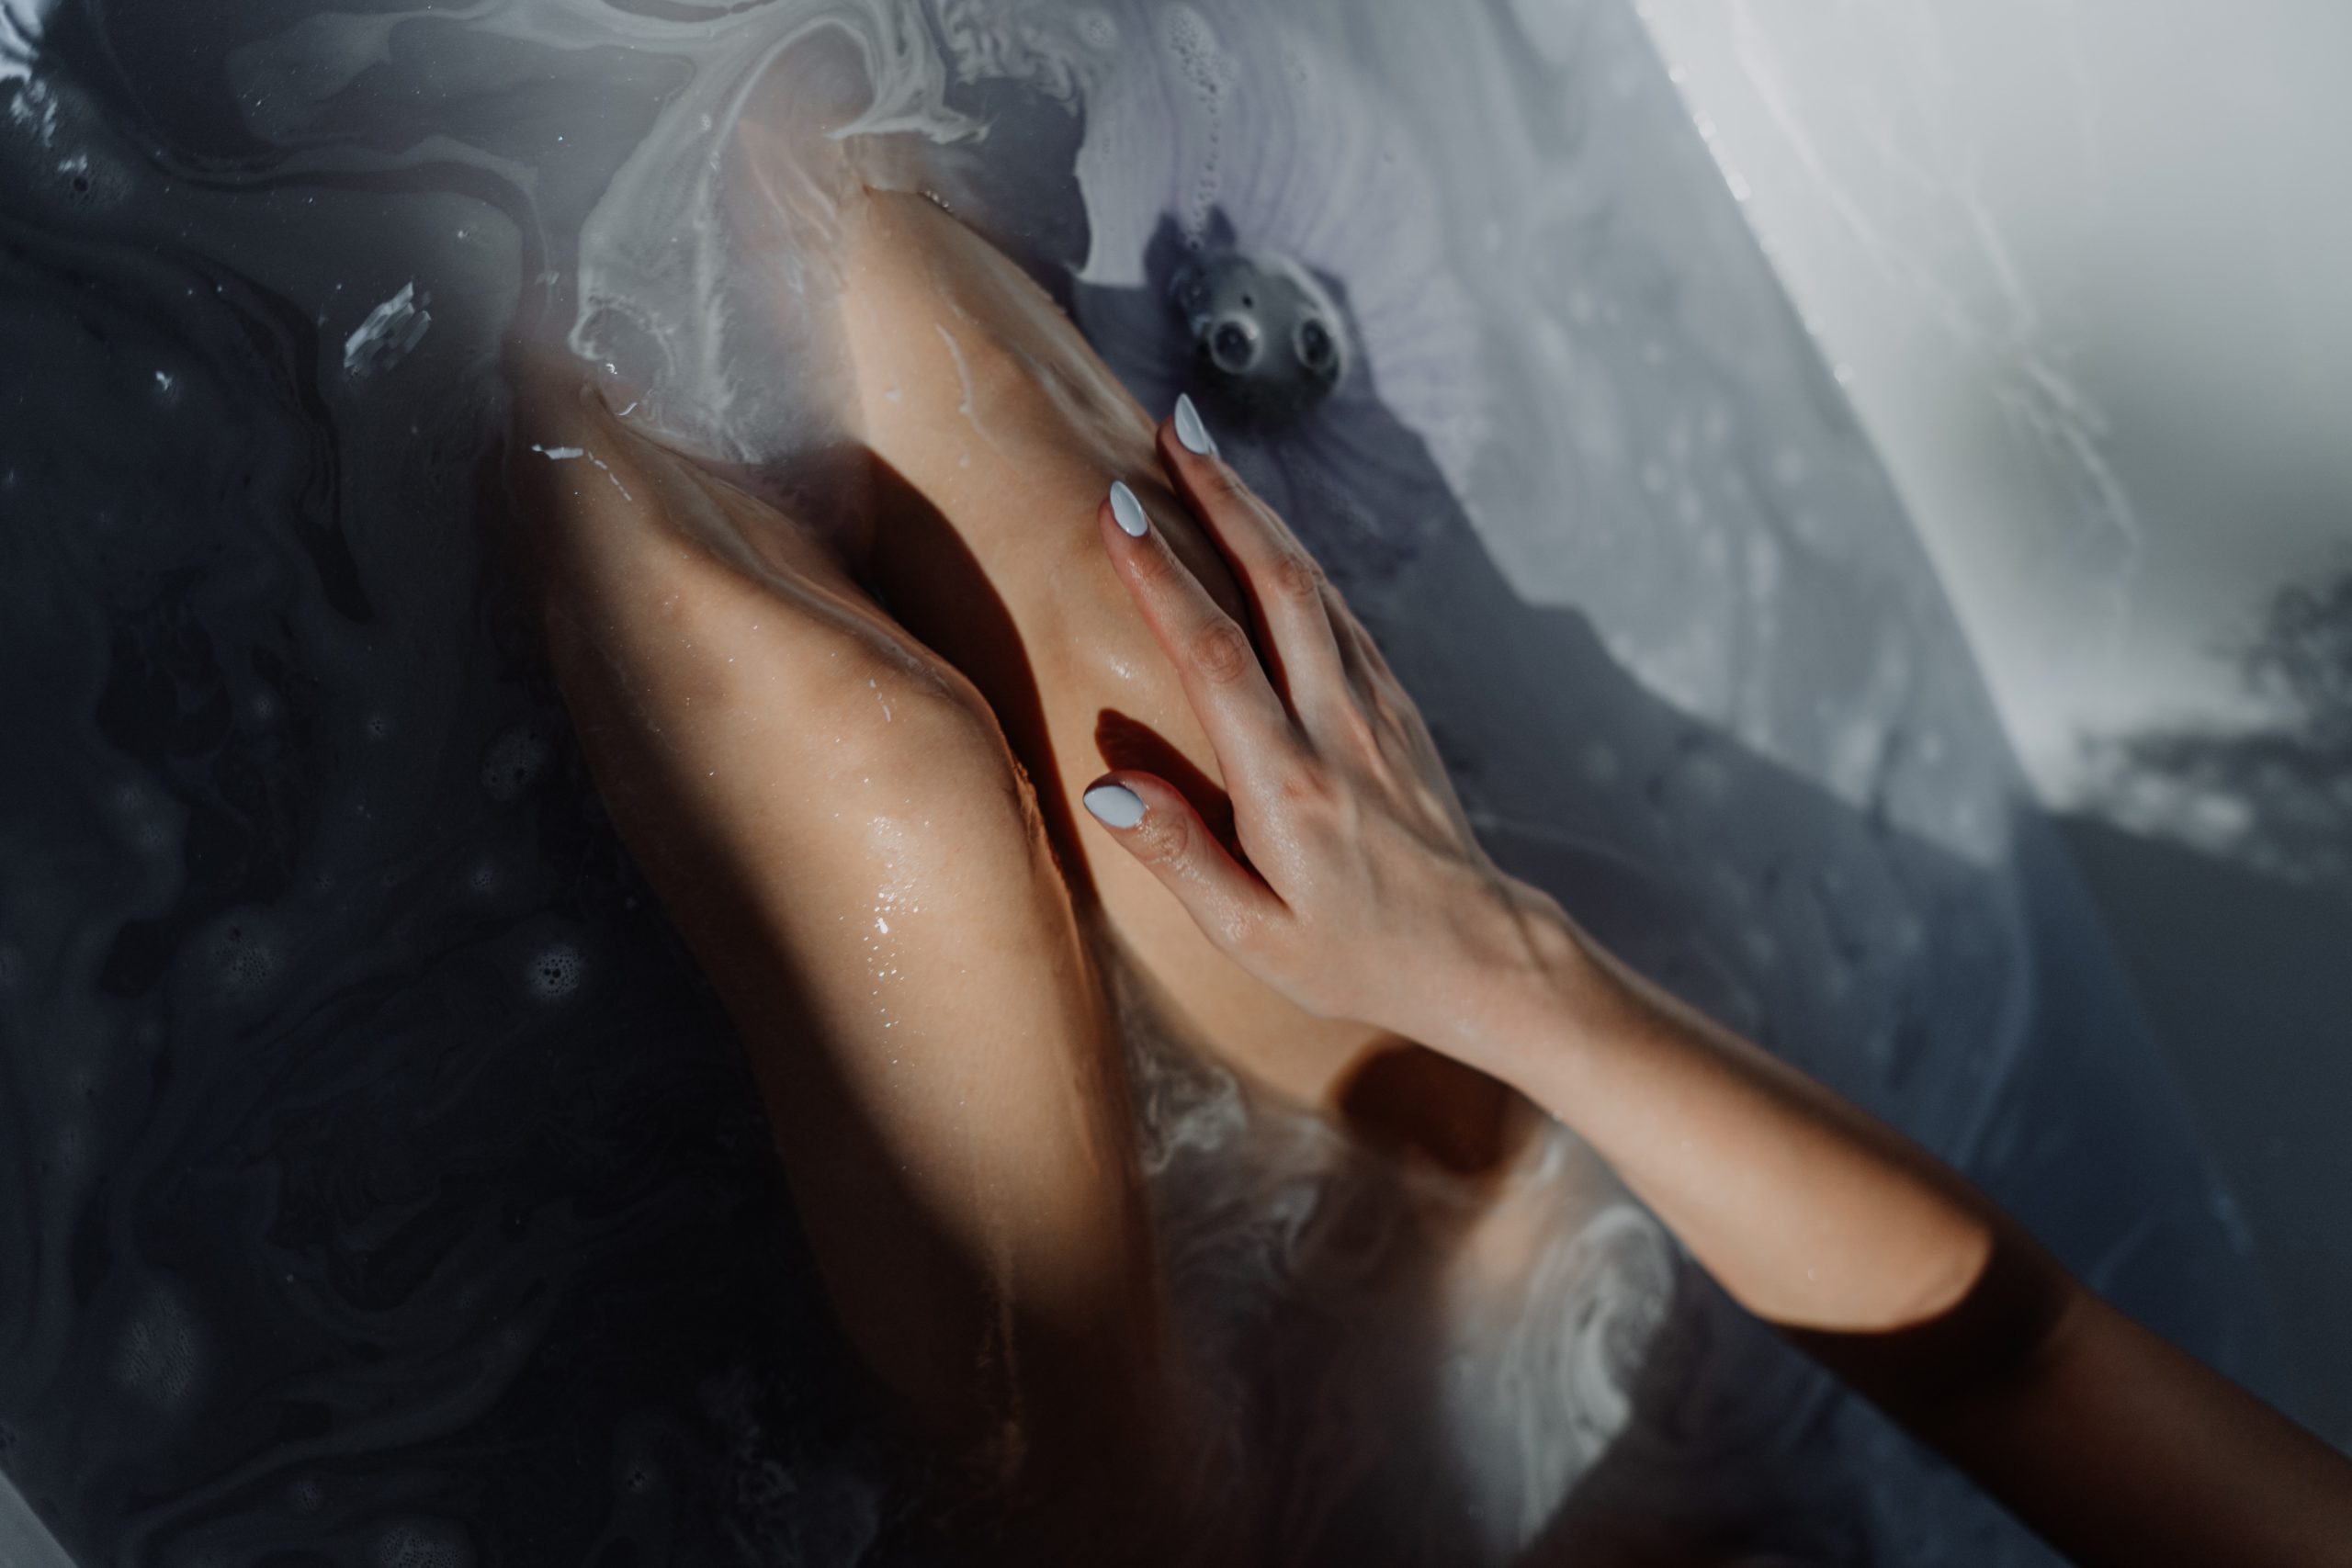 woman touching her leg in bath